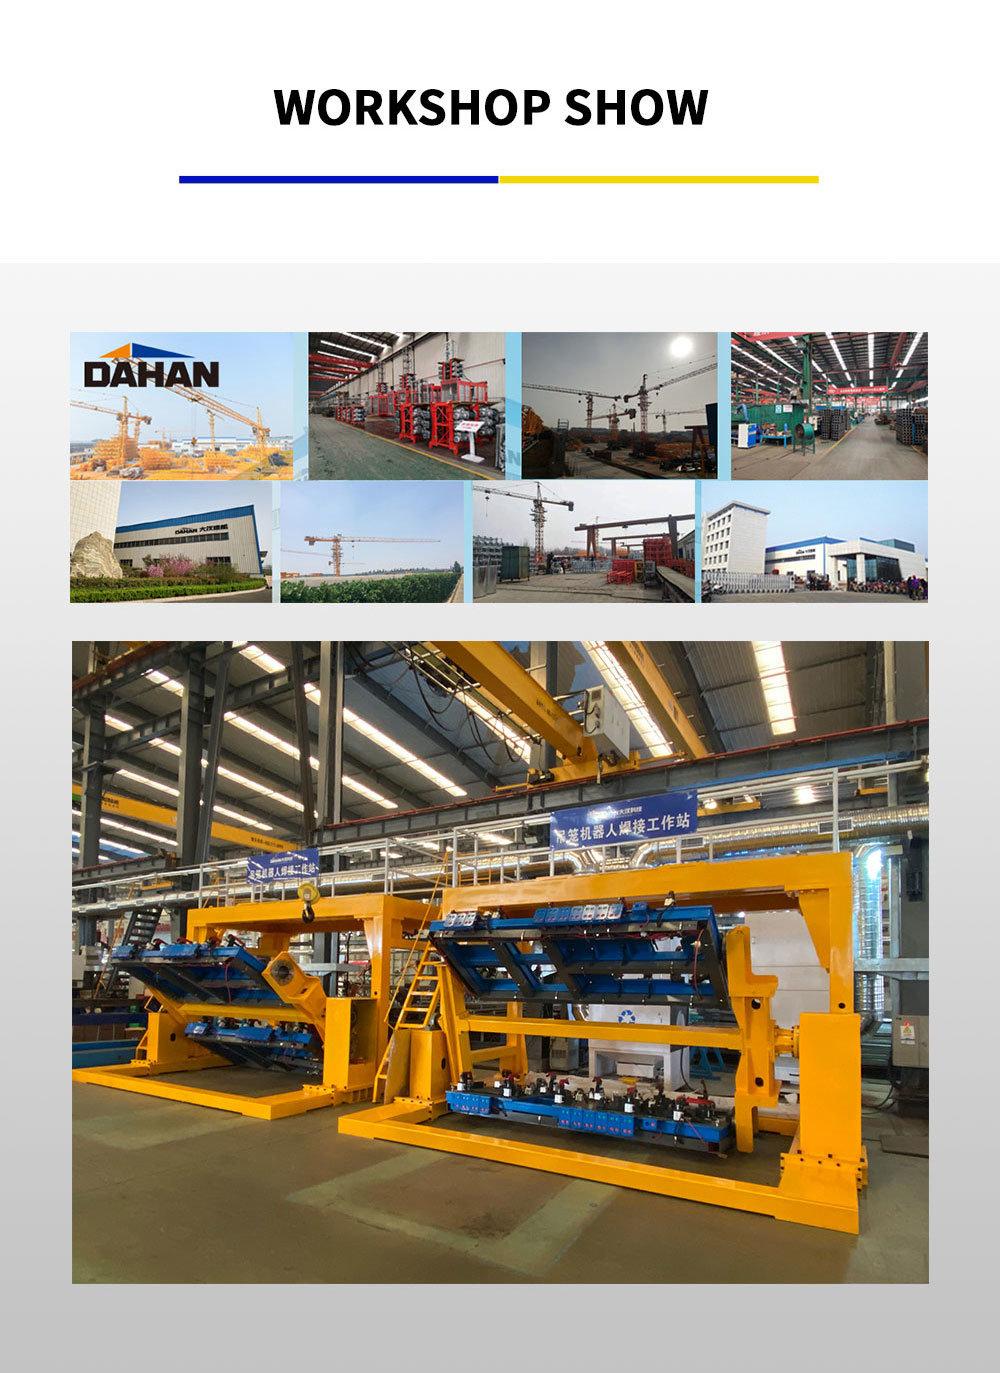 Chinese Manufacturer Dahan Provides 8 Ton Tower Crane